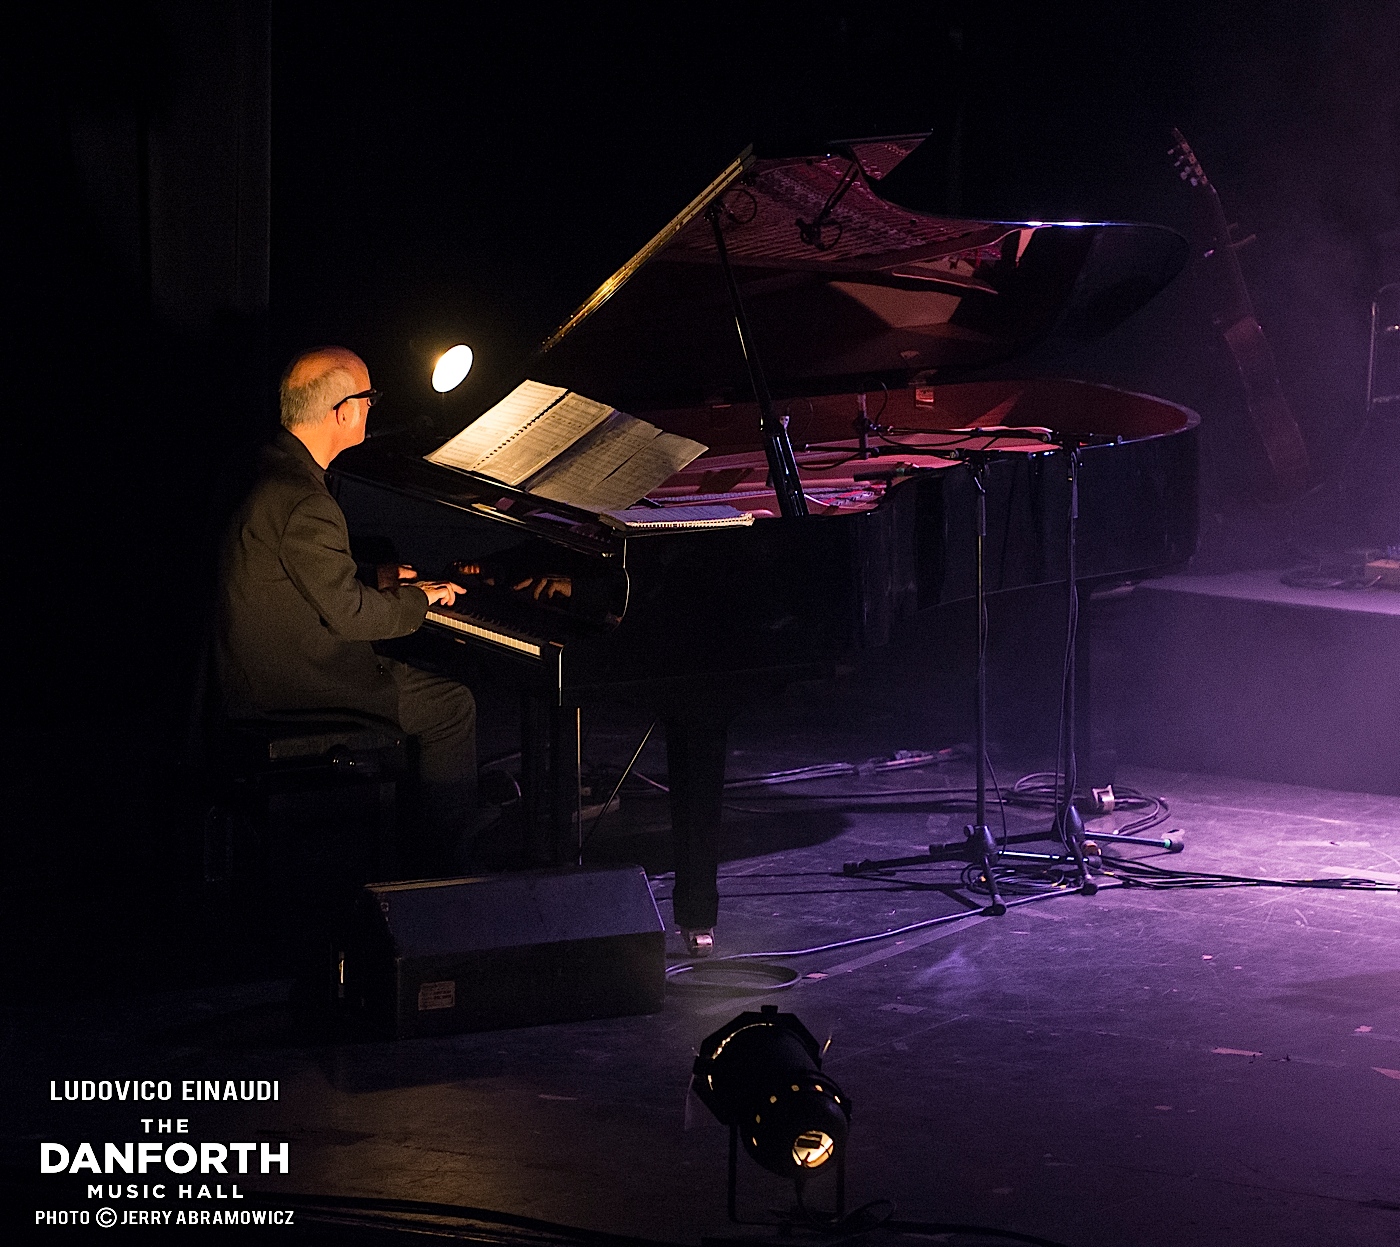 20130517 Ludovico Einaudi performs at The Danforth Music Hall Toronto 0176